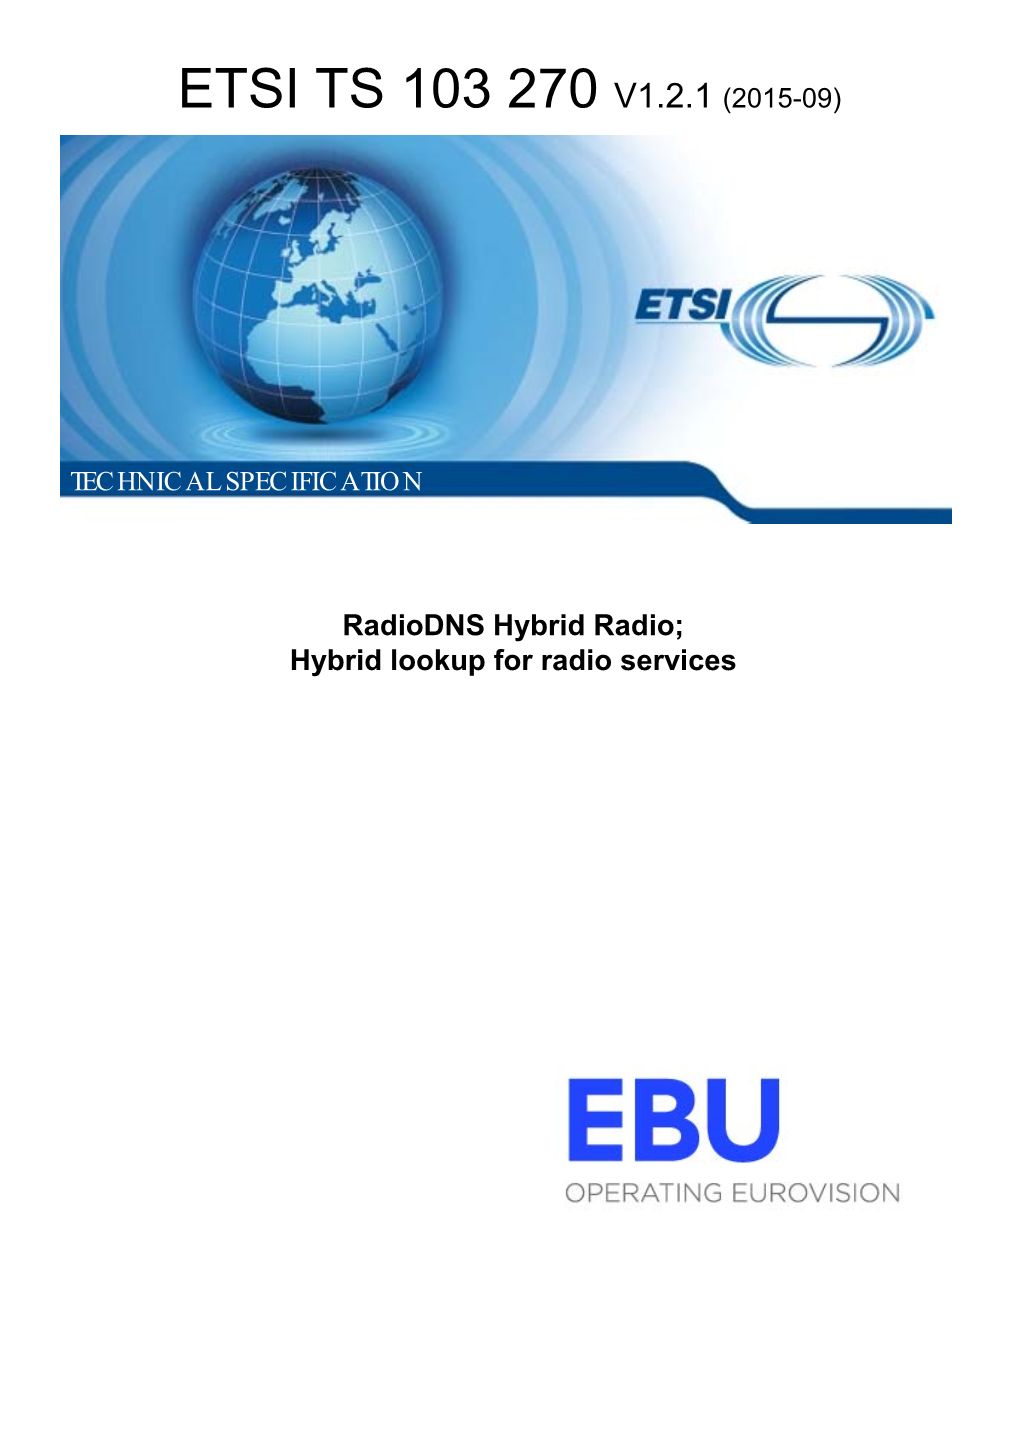 Radiodns Hybrid Radio; Hybrid Lookup for Radio Services